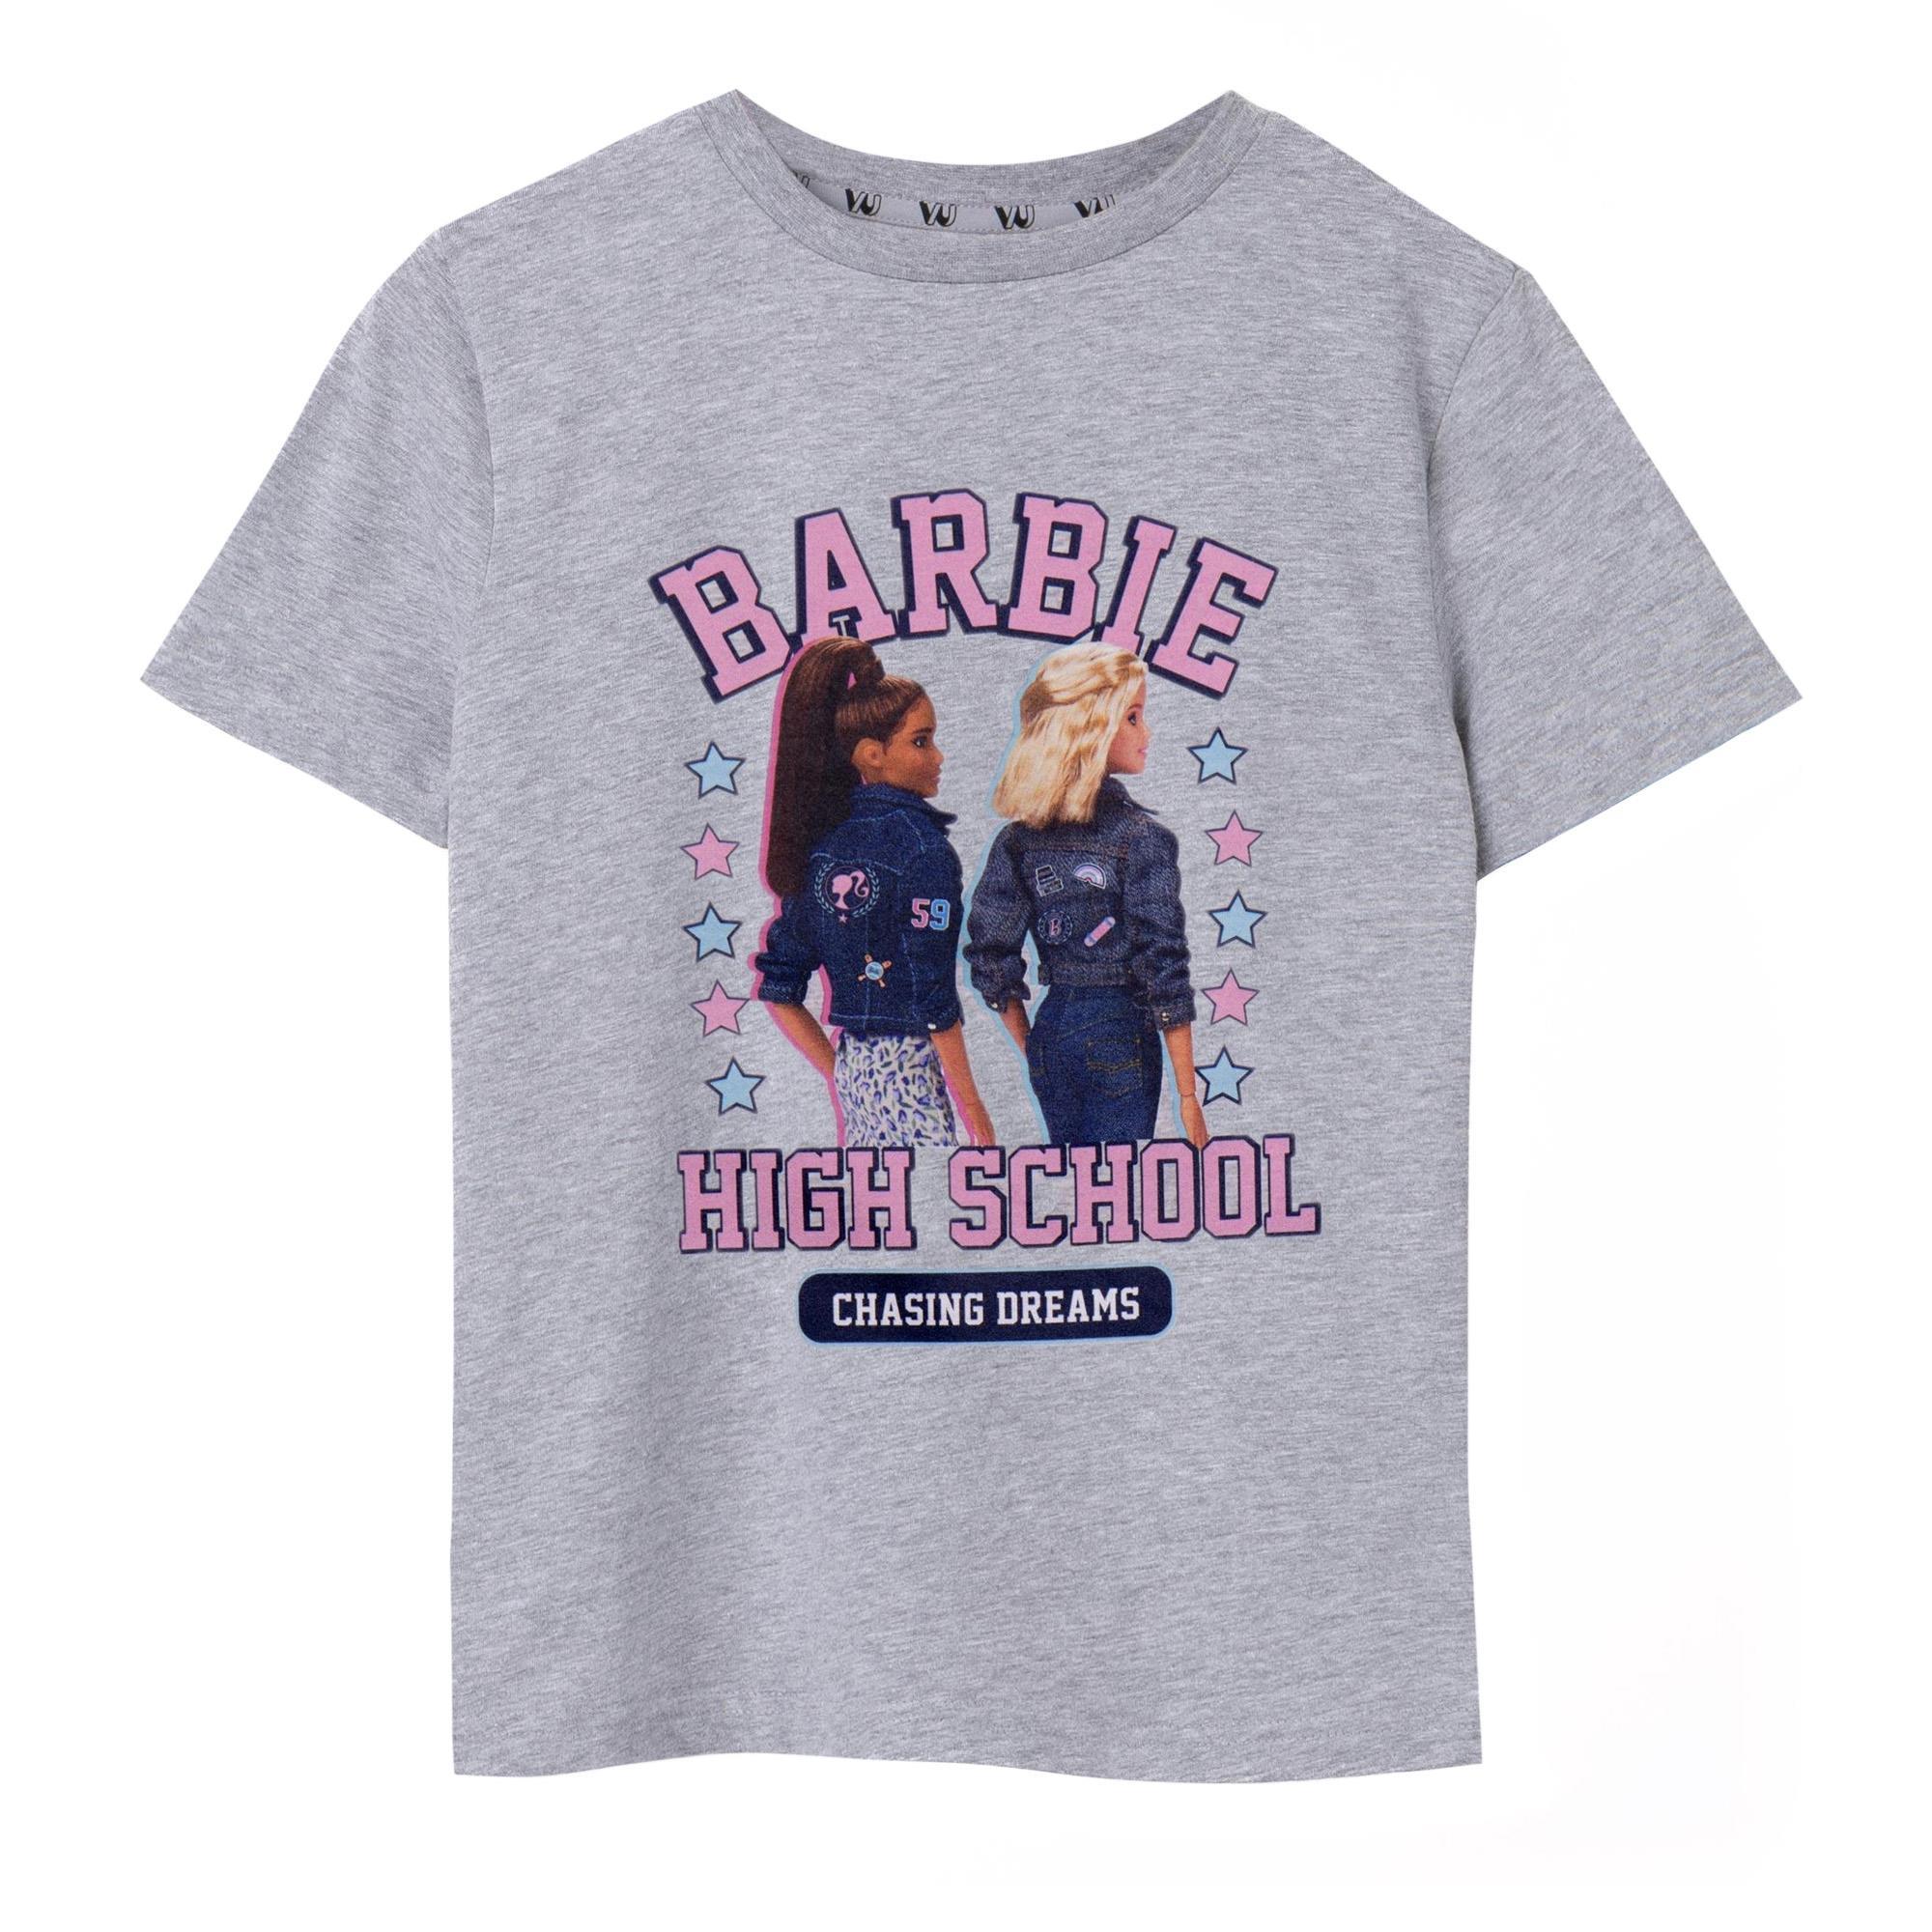 Barbie Girls High School Short-Sleeved T-Shirt (Grey Marl) (7-8 Years)